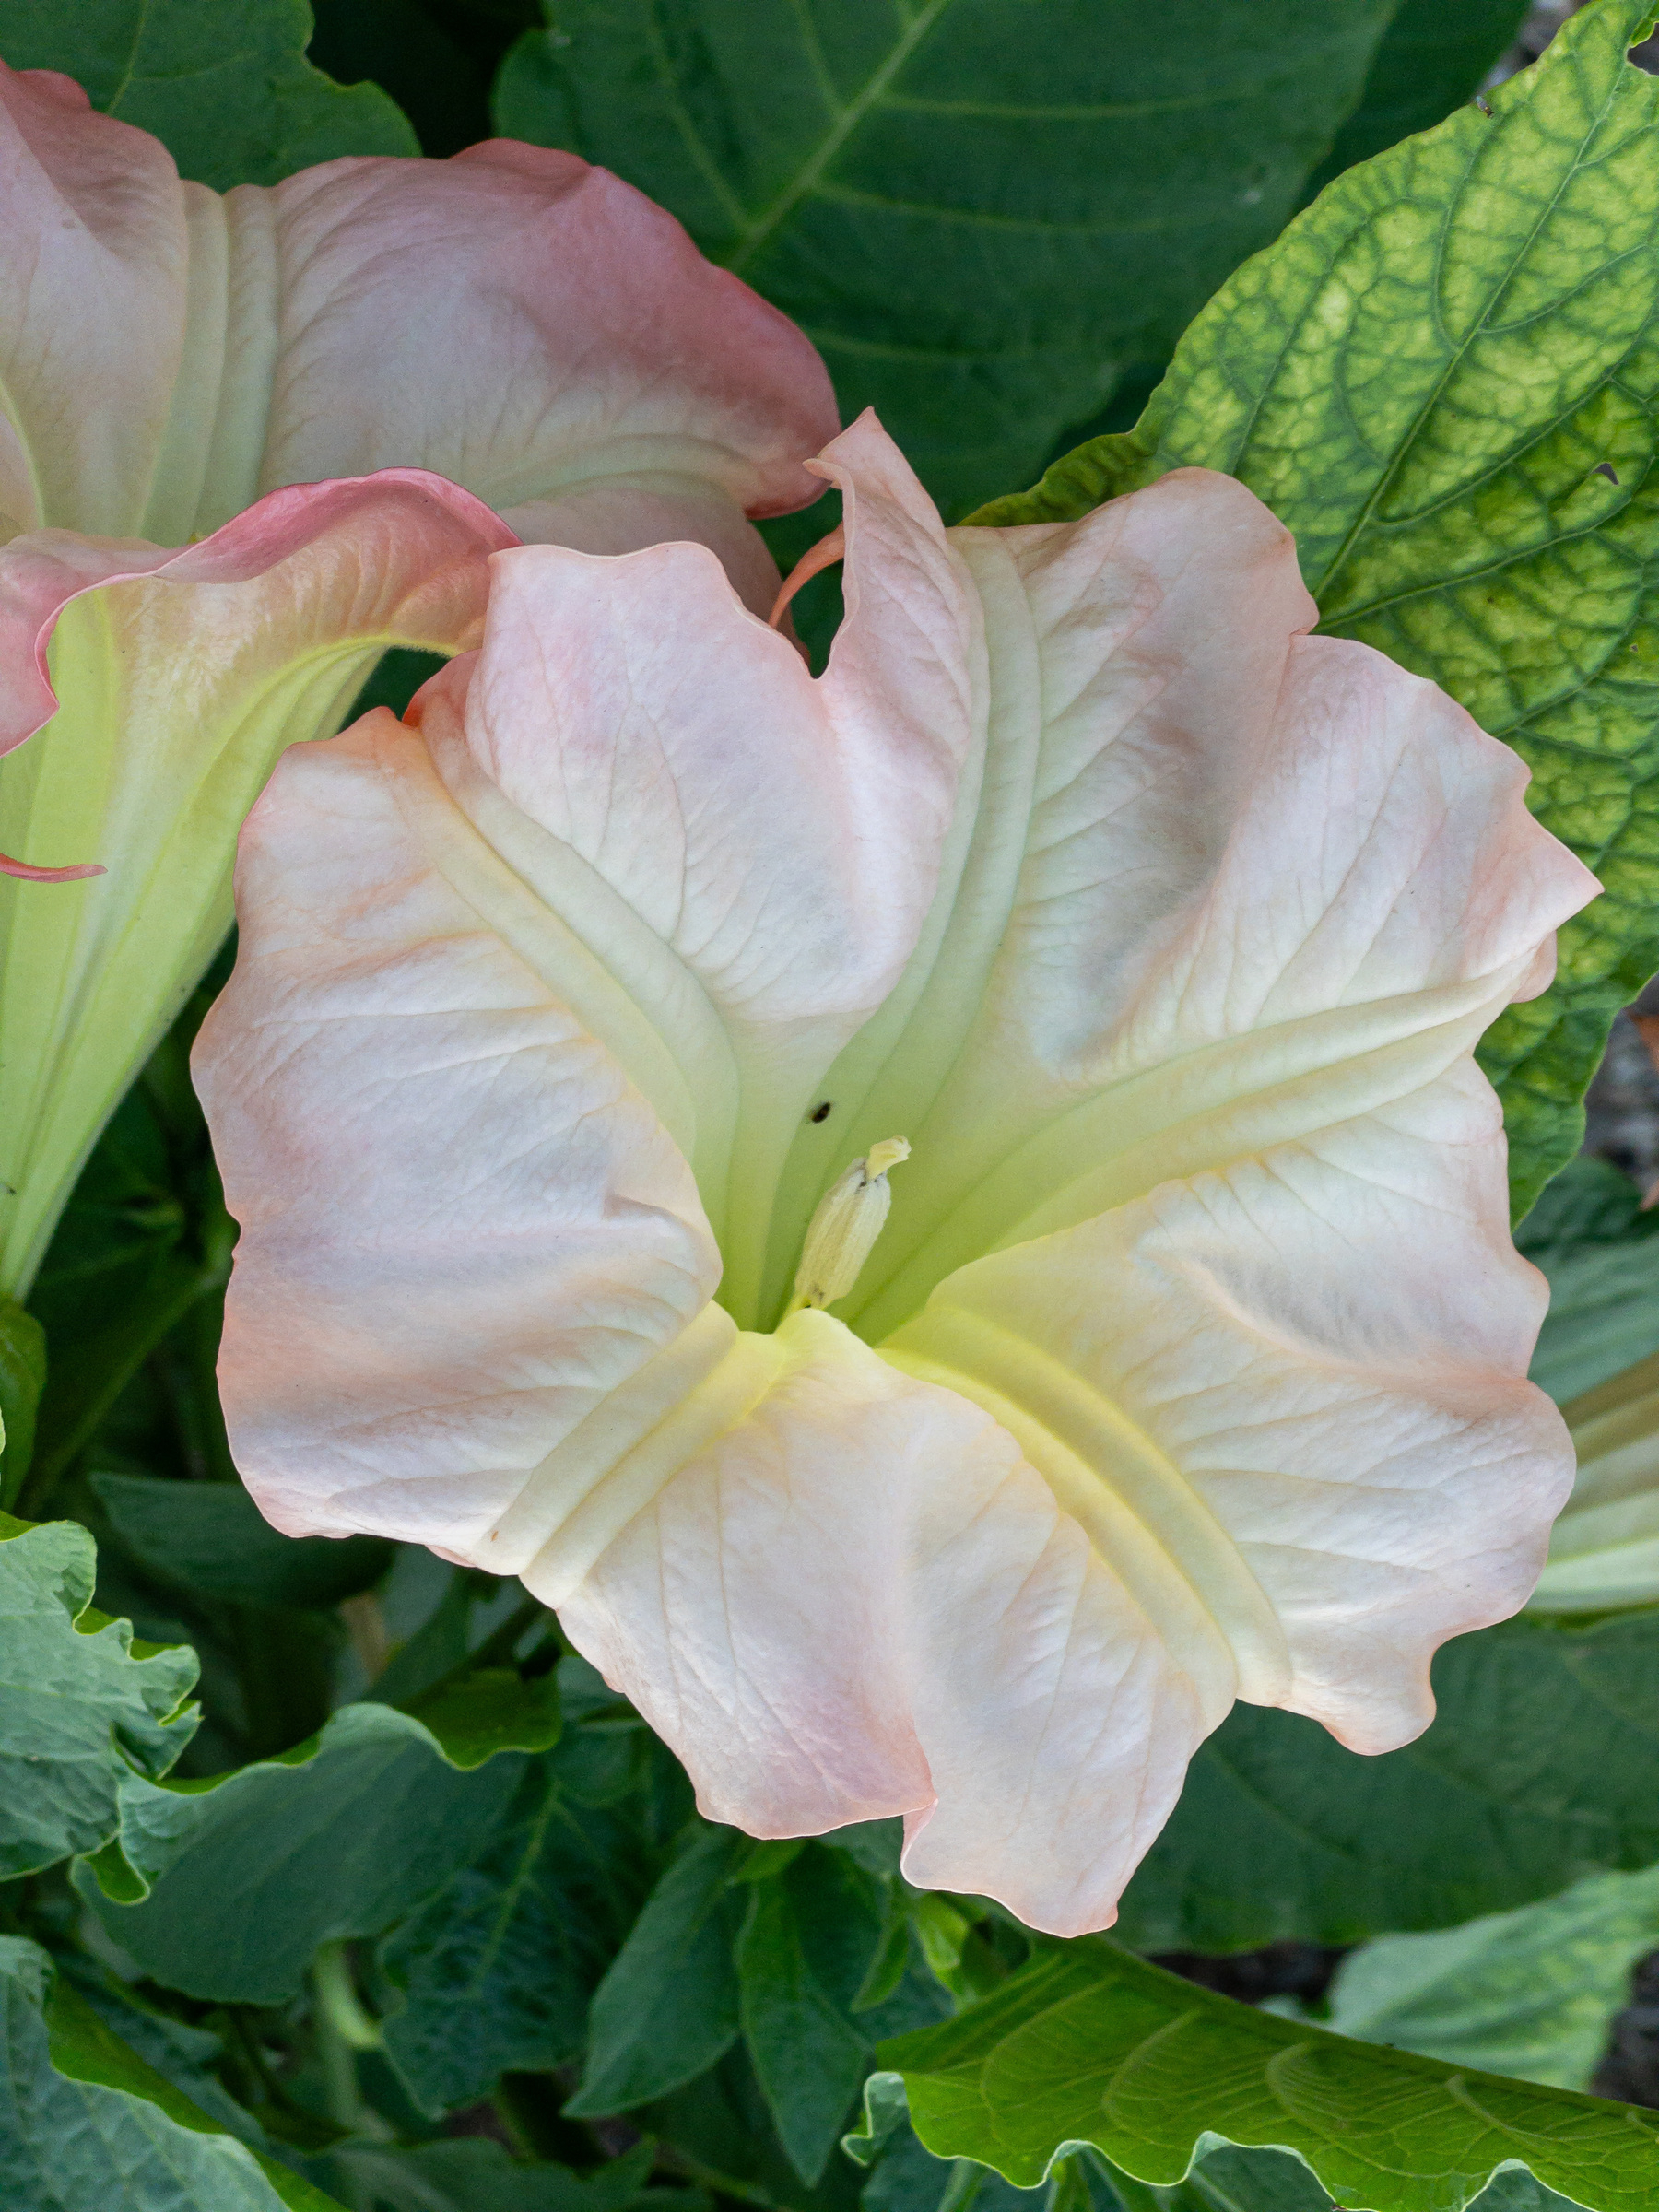 Light pink/orange trumpet type blossom. Closeup.